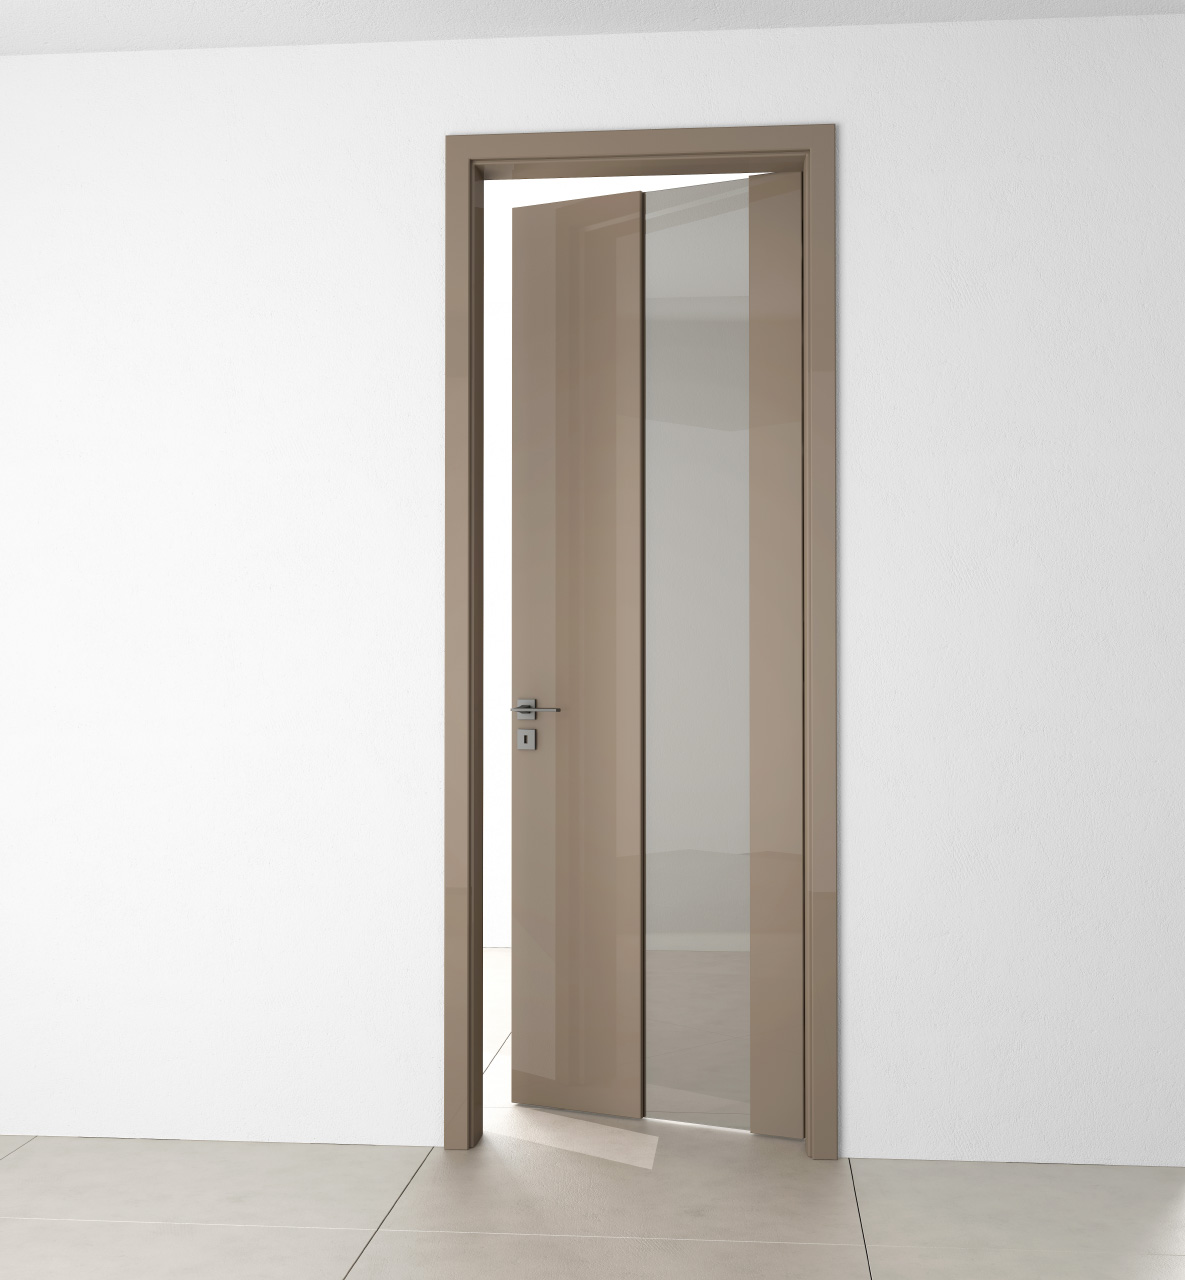 Hanák furniture SPIRIT-LITE interior doors 